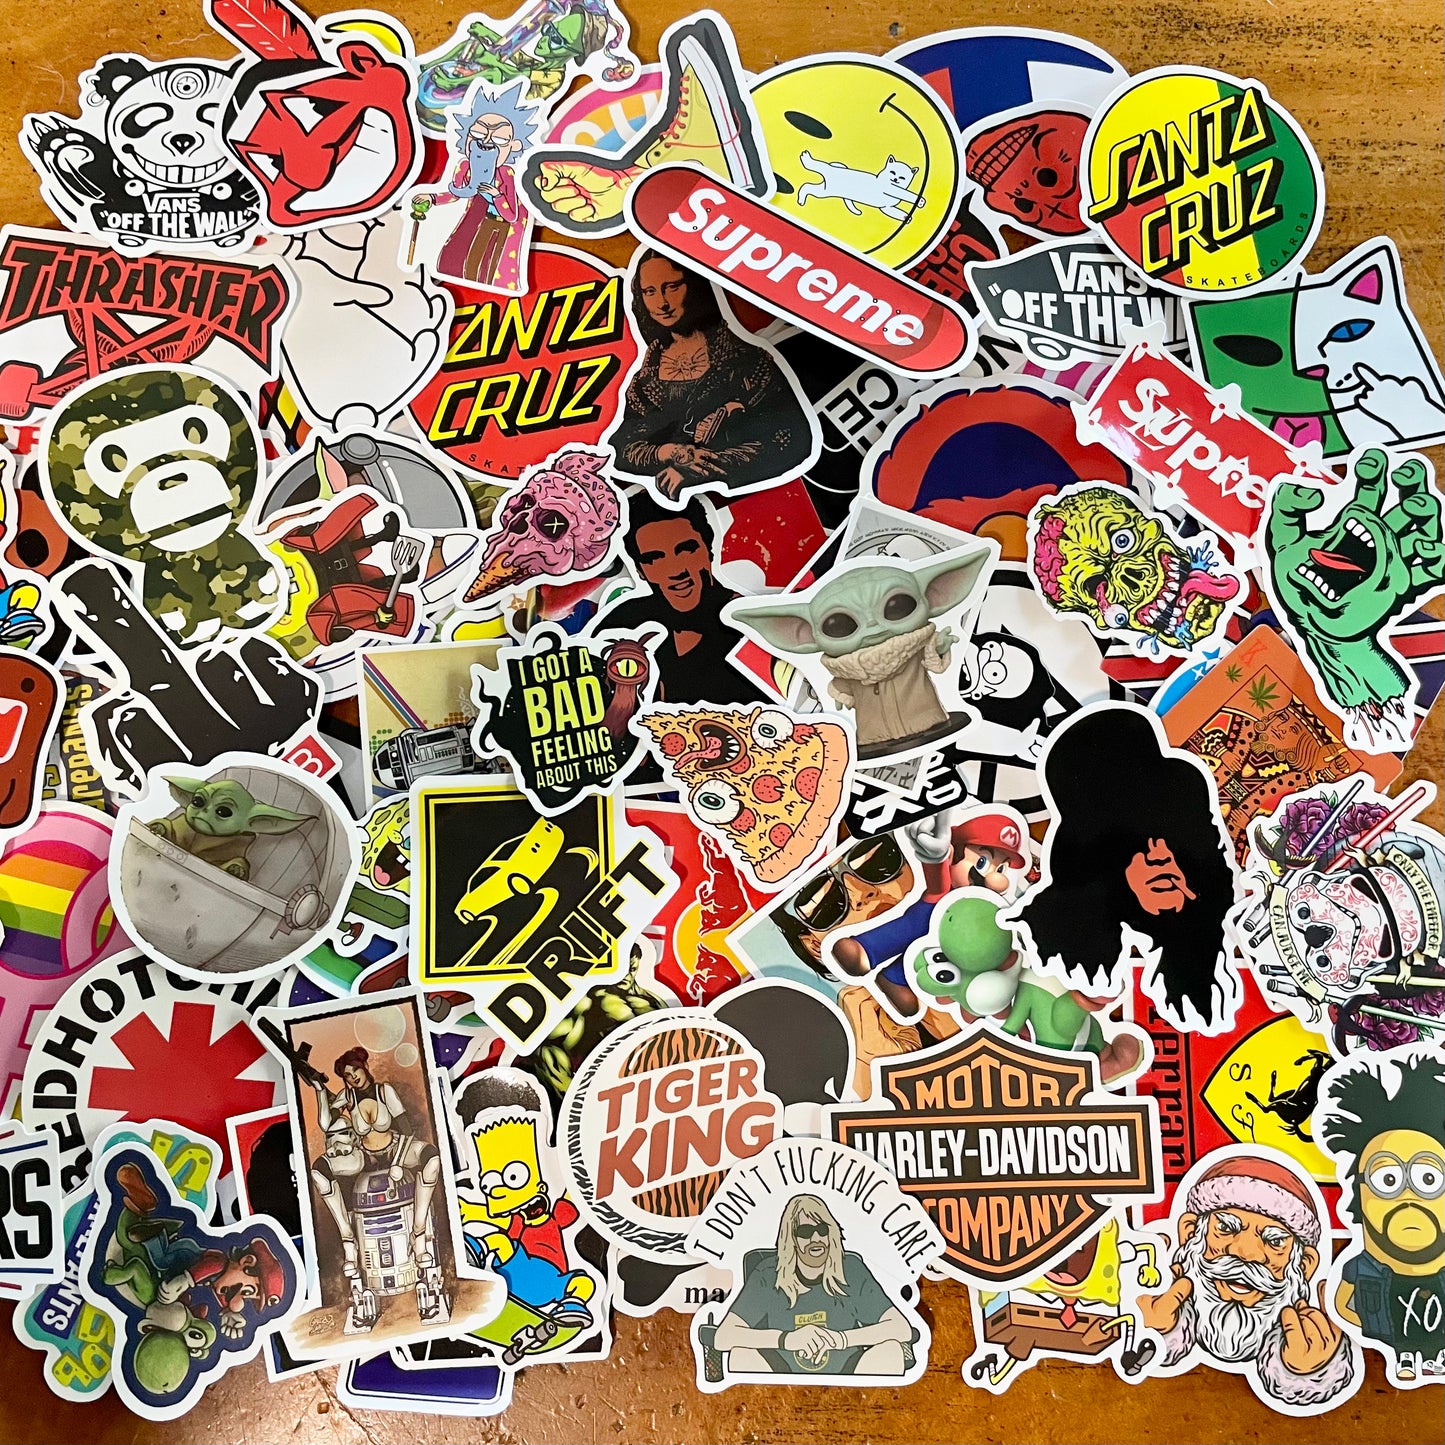 Pop culture sticker bomb pack - naughty / fun / art / skate / music / movie stickers